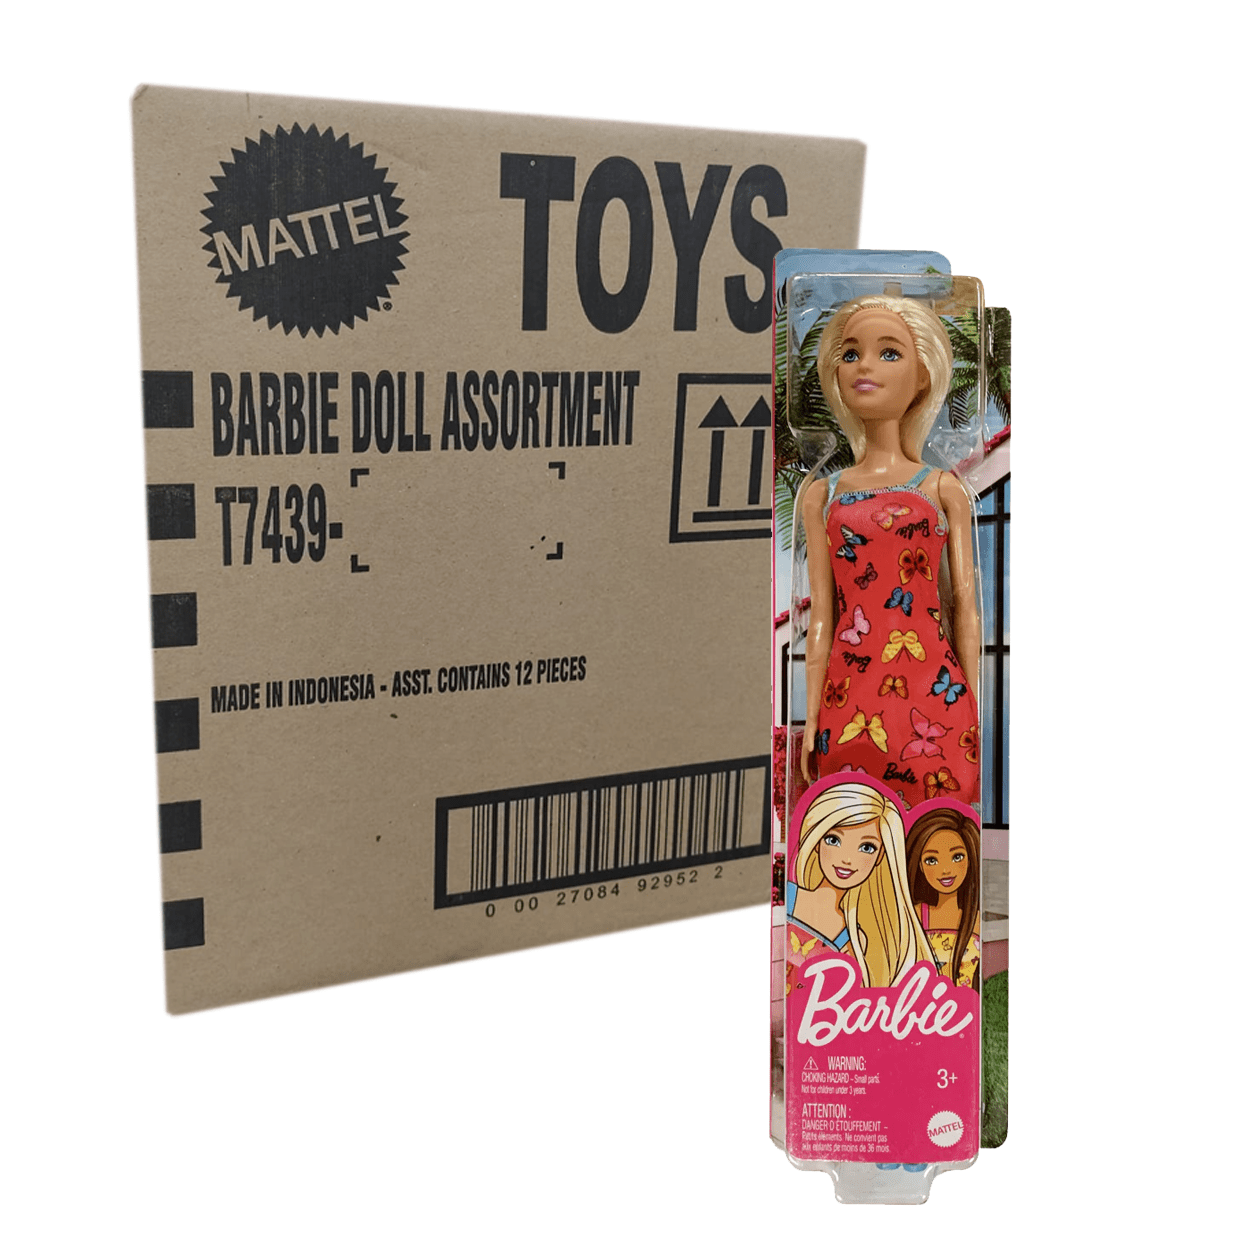 Boneca Barbie Bailarina Loira com Roupa Rosa Original Mattel